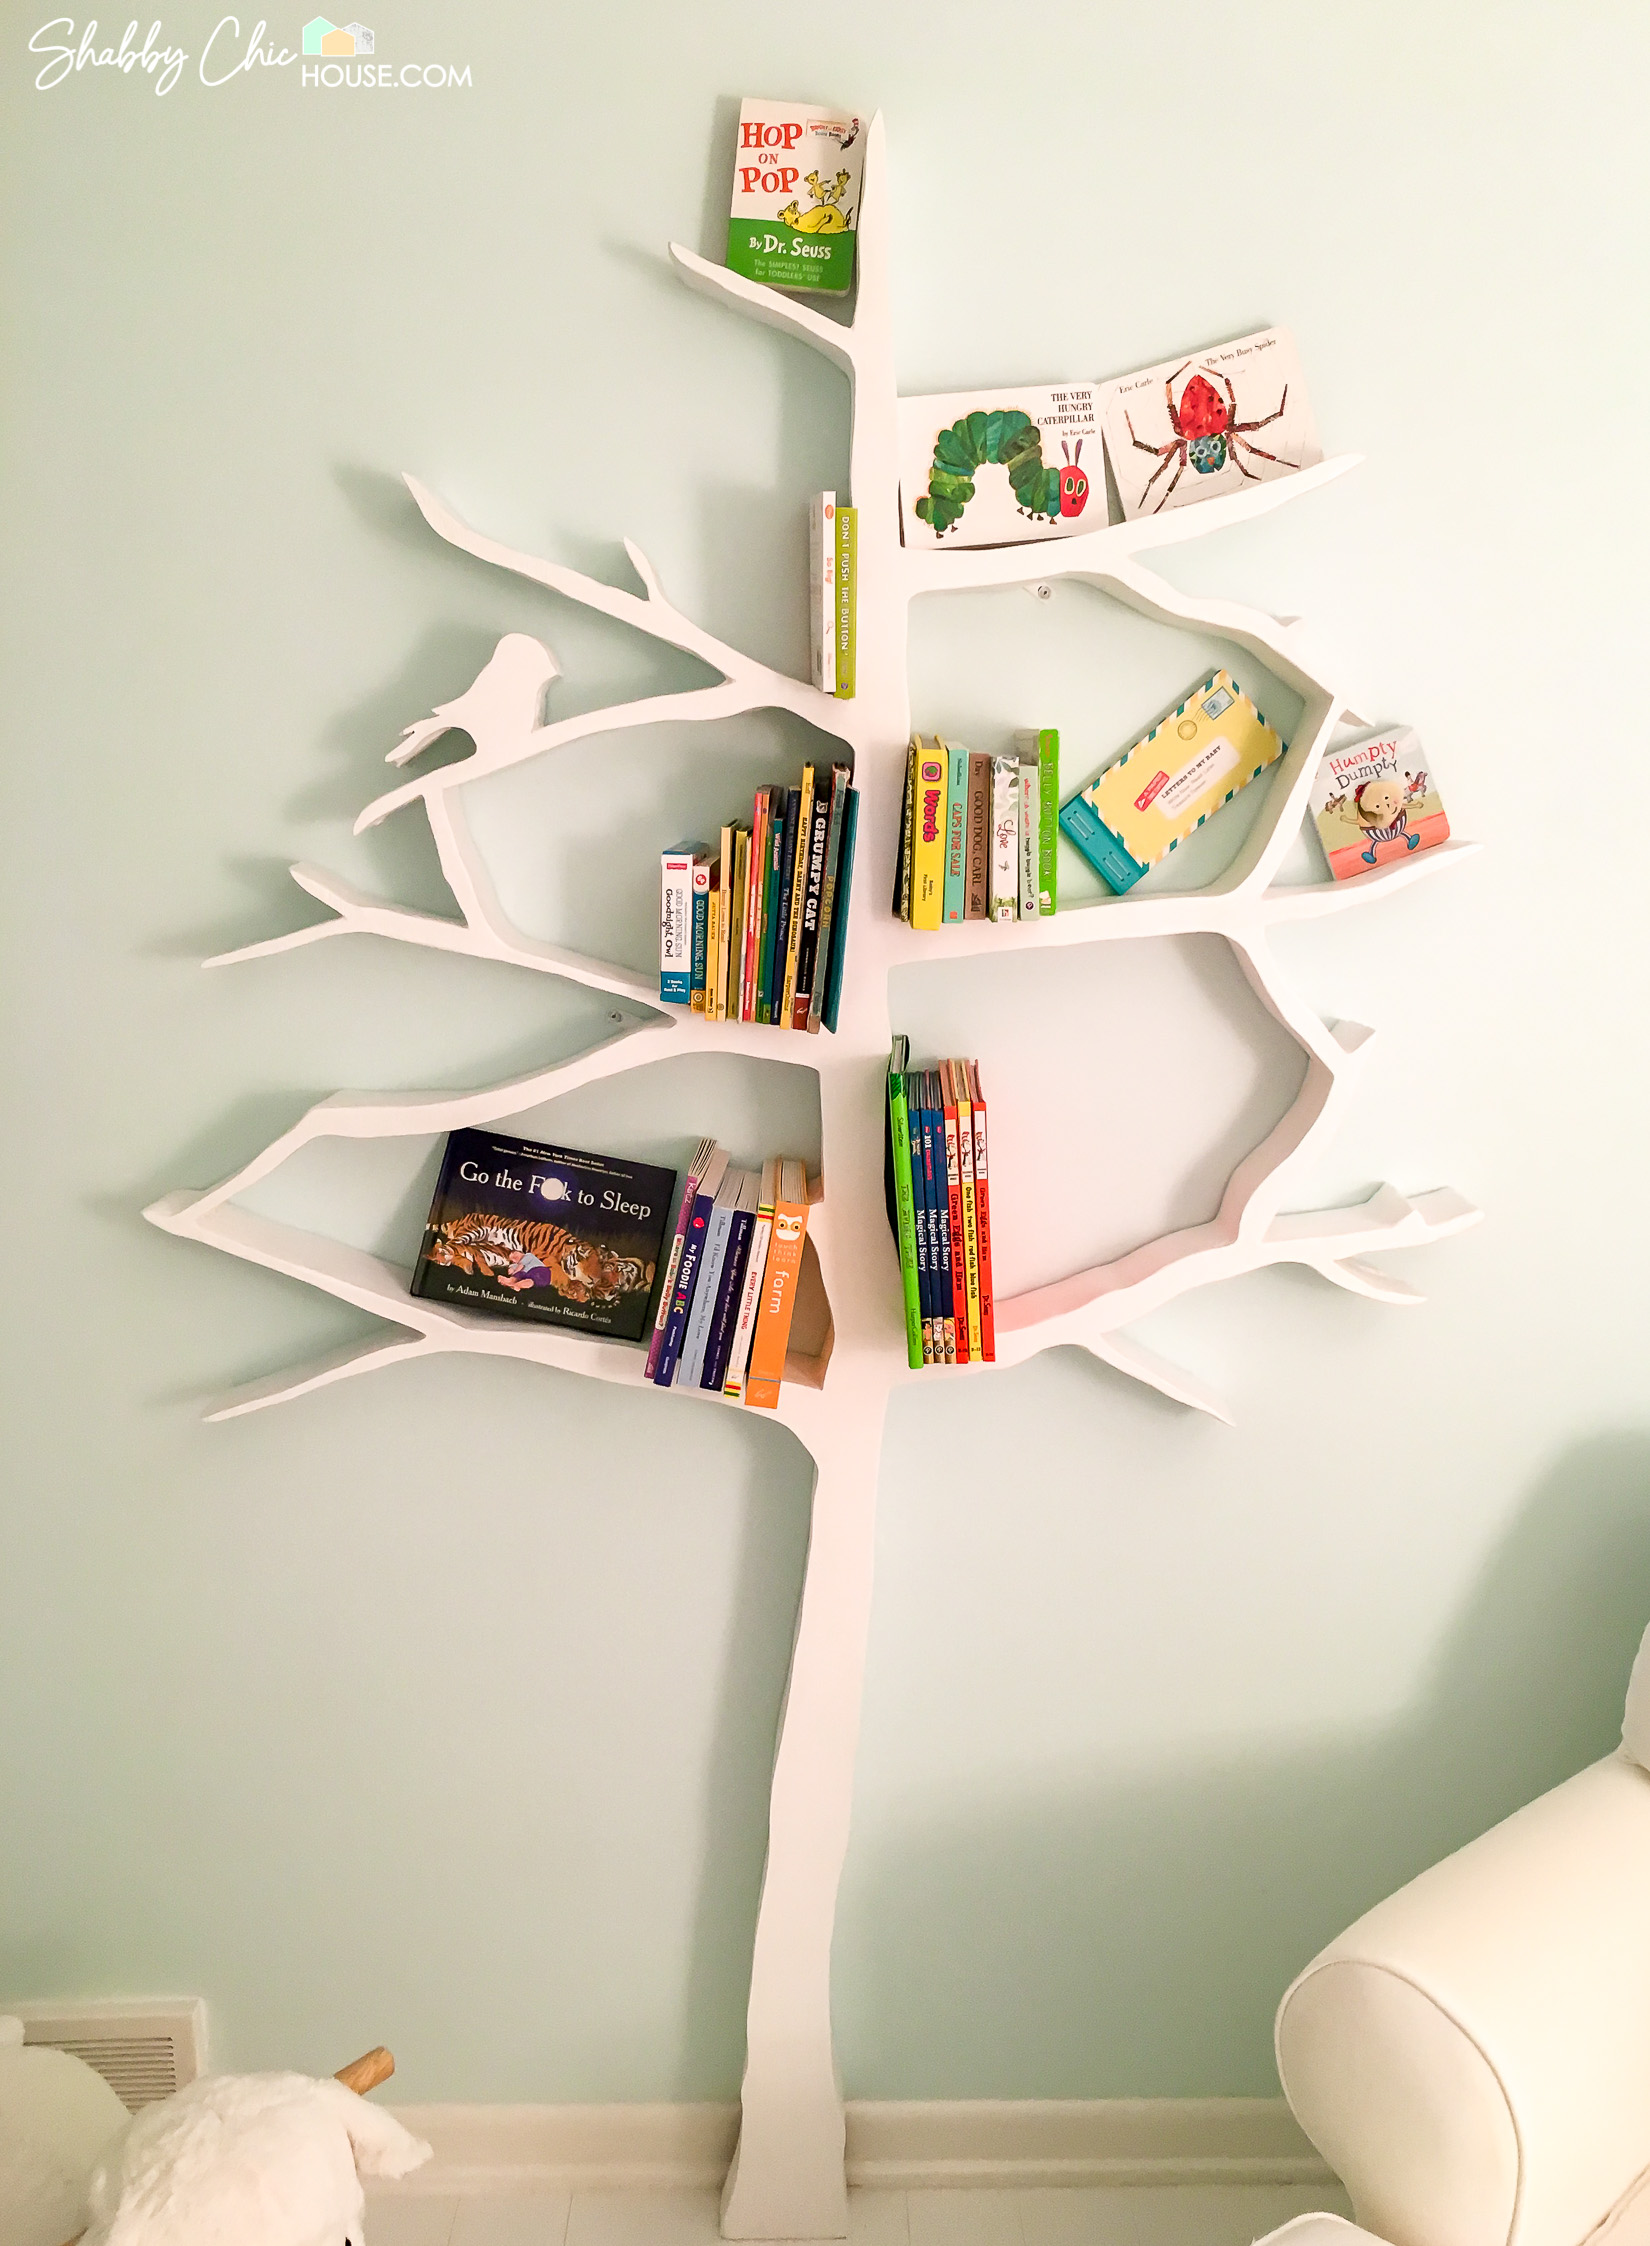 How To Build A Tree Shaped Bookshelf Shabbychichouse Com